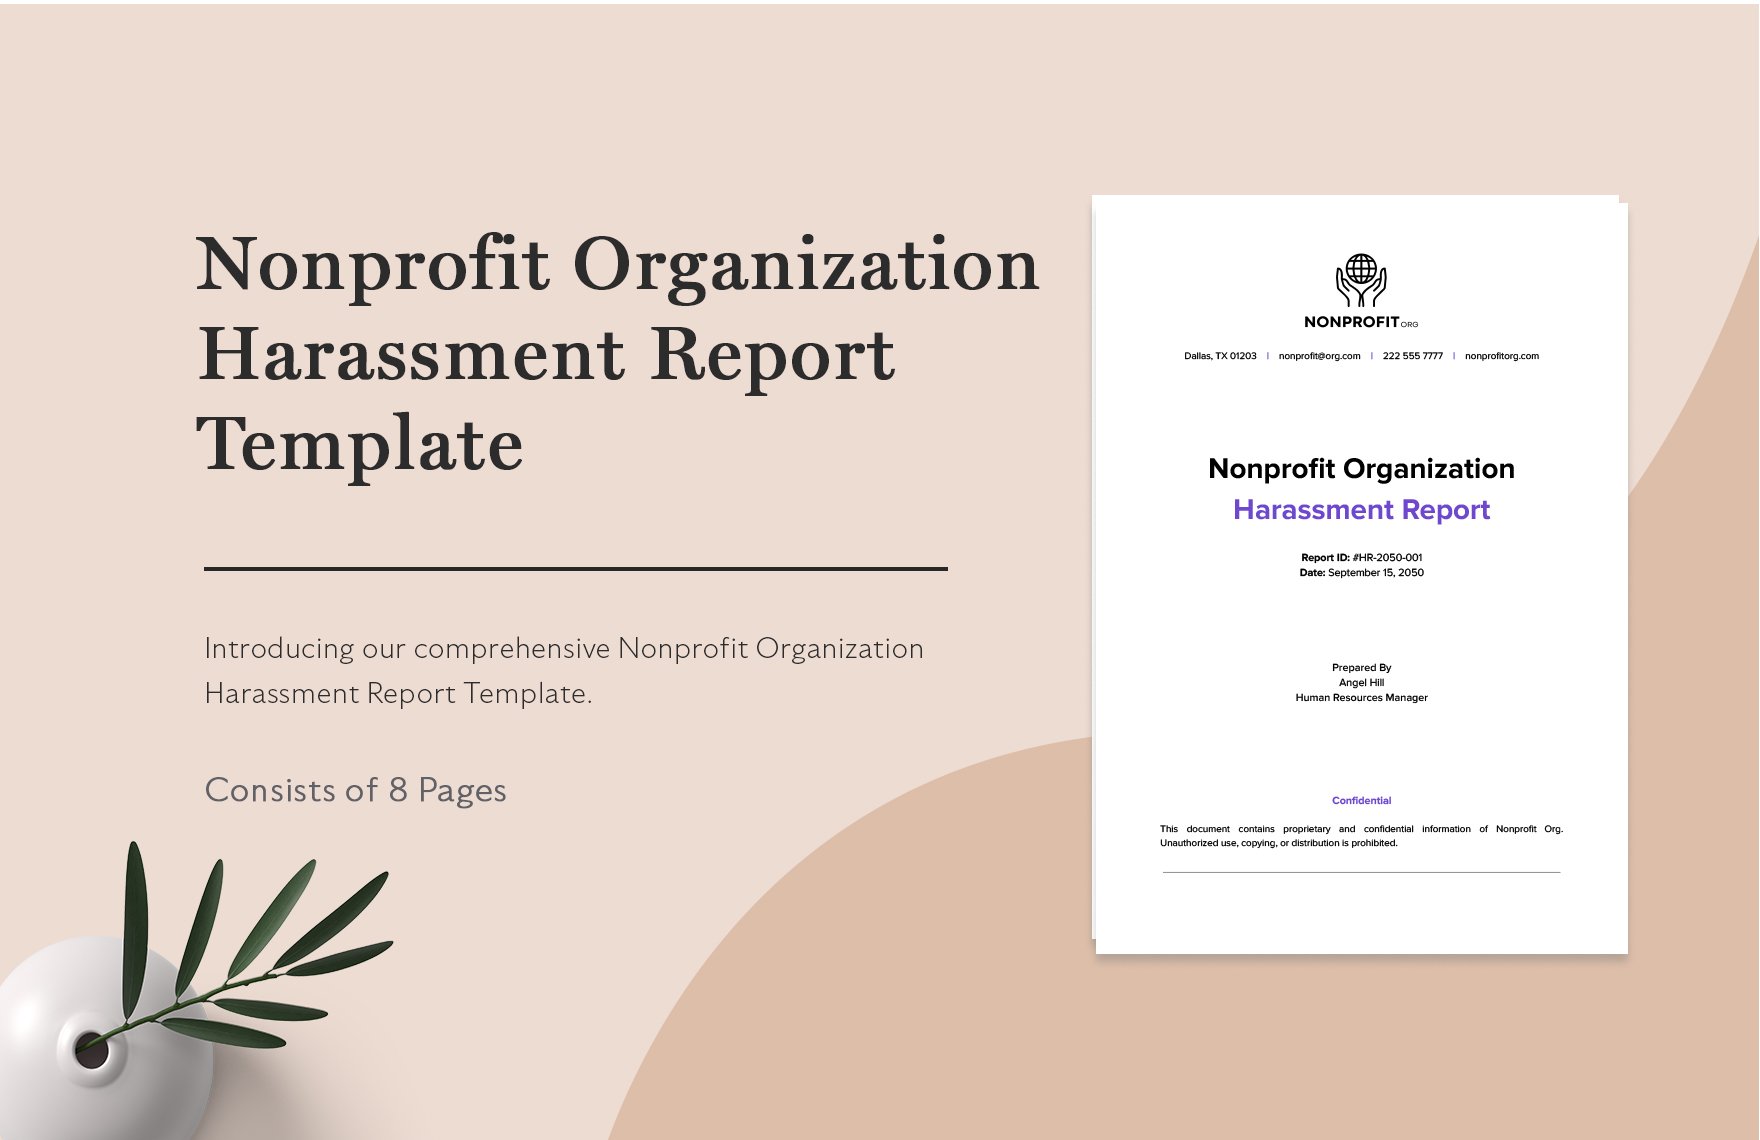 Nonprofit Organization Harassment Report Template